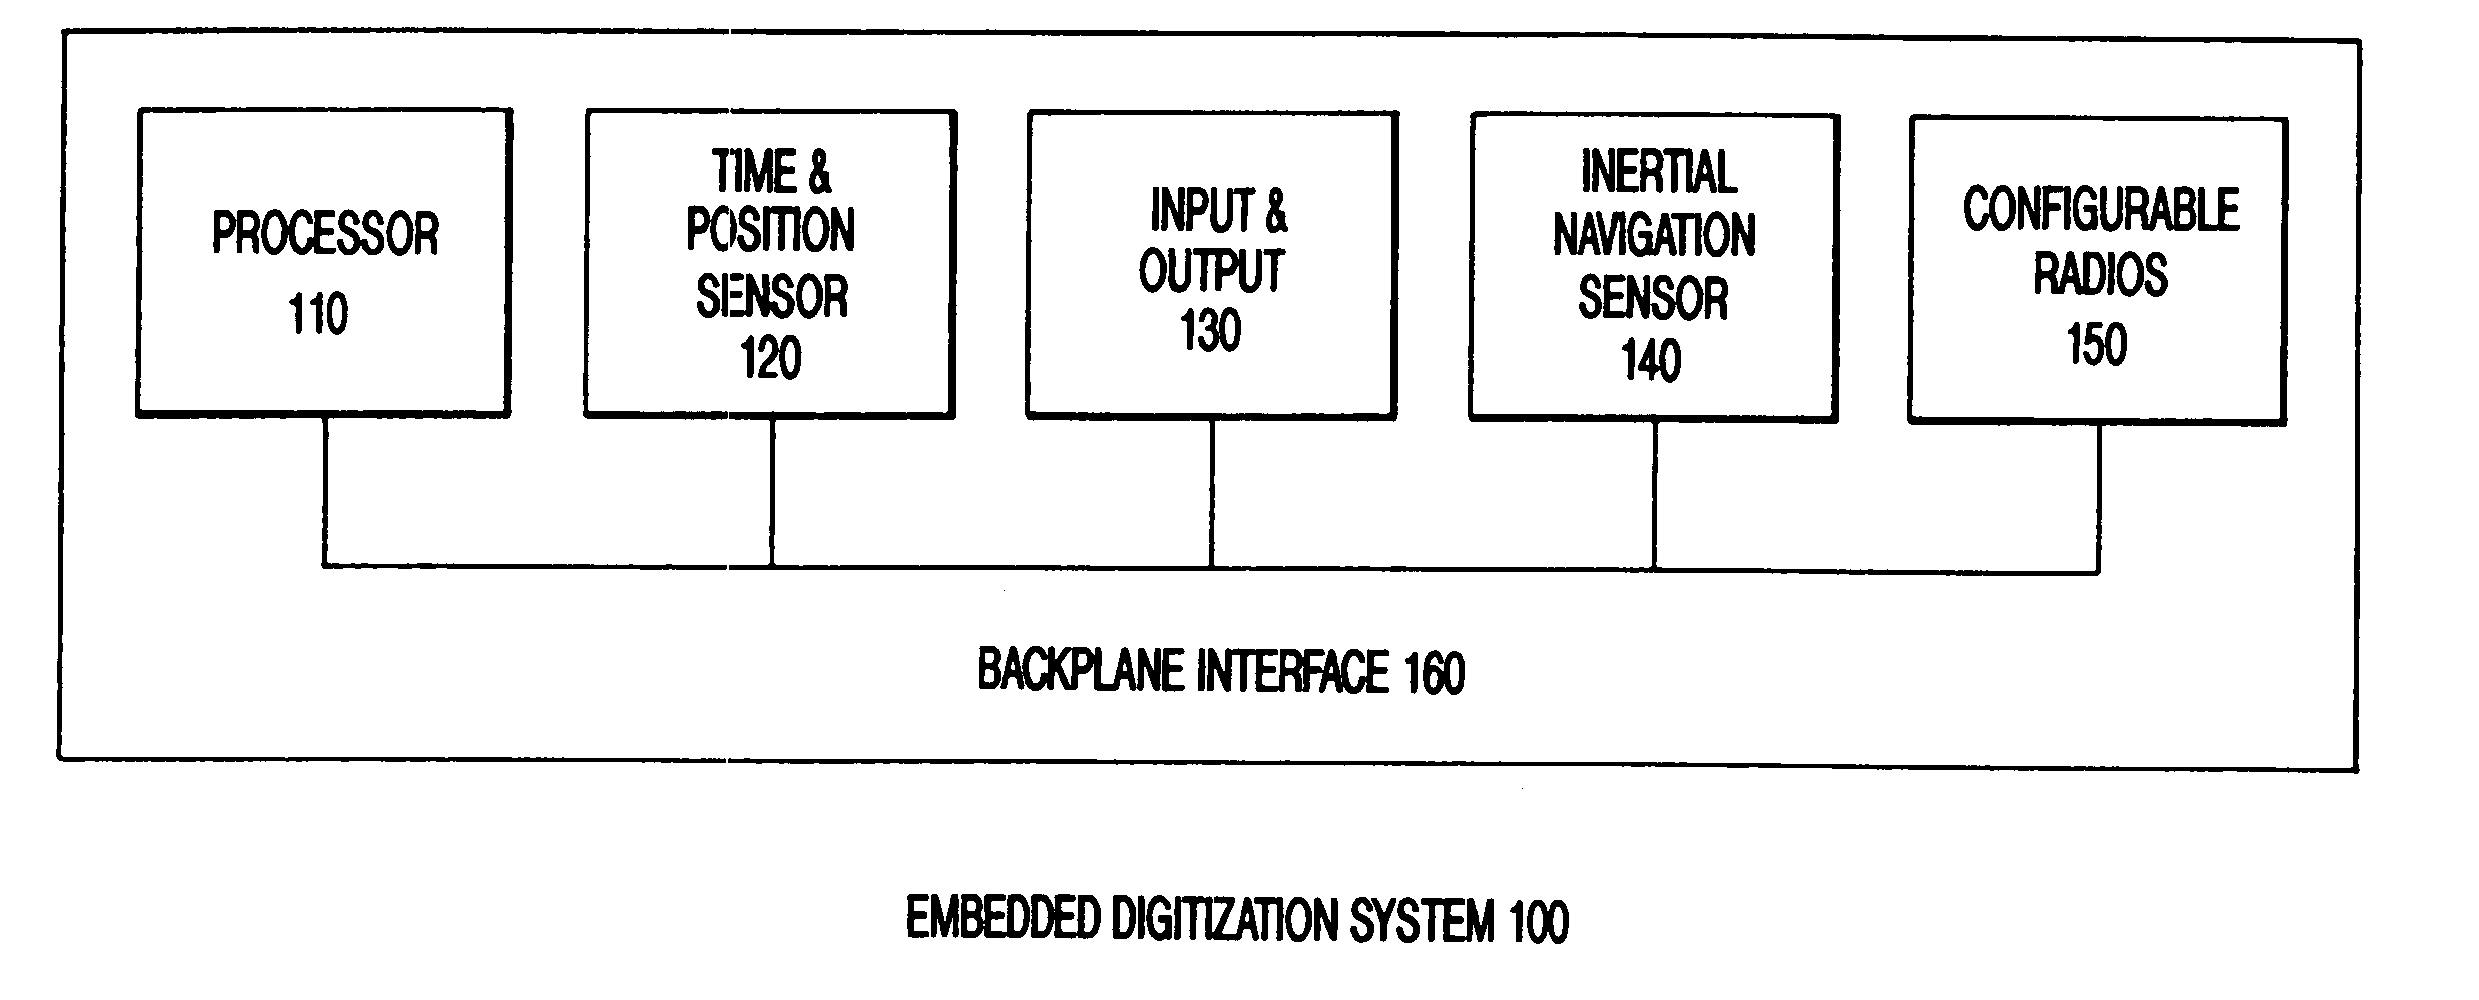 Embedded digitization system